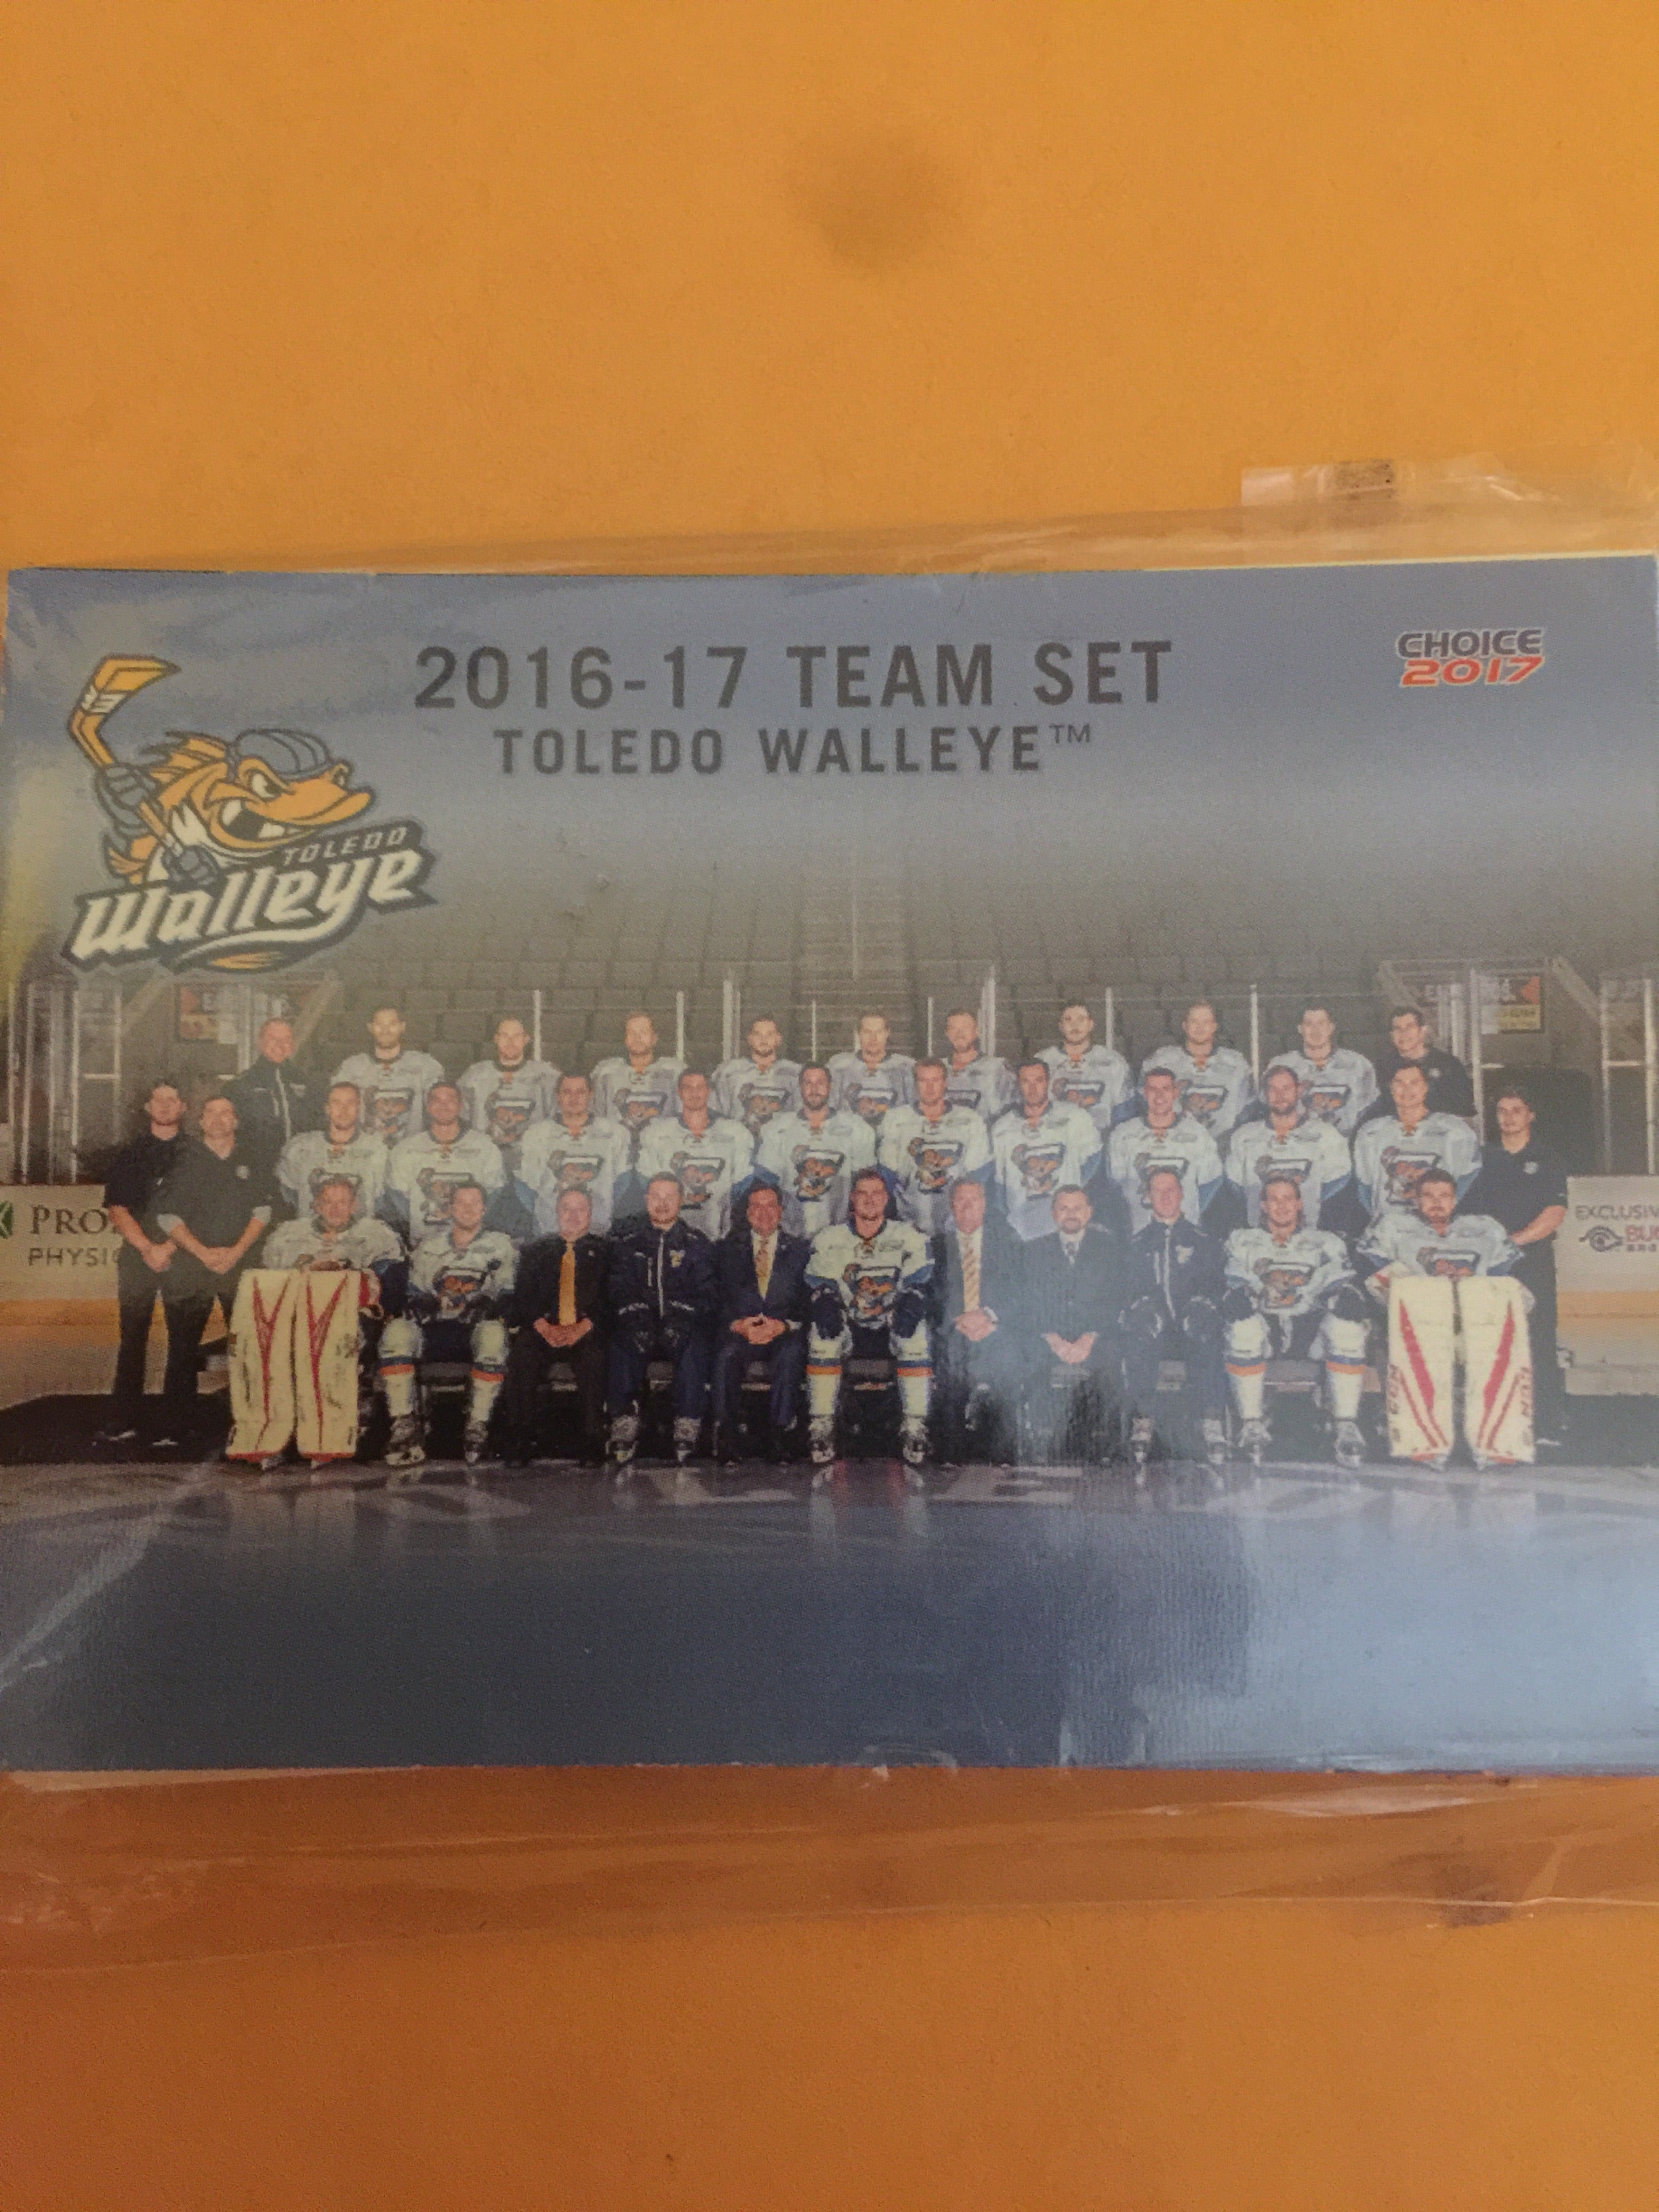 New Authentic Pro Stock CCM Toledo Walleye ECHL Hockey Player Jersey sz 56  7287